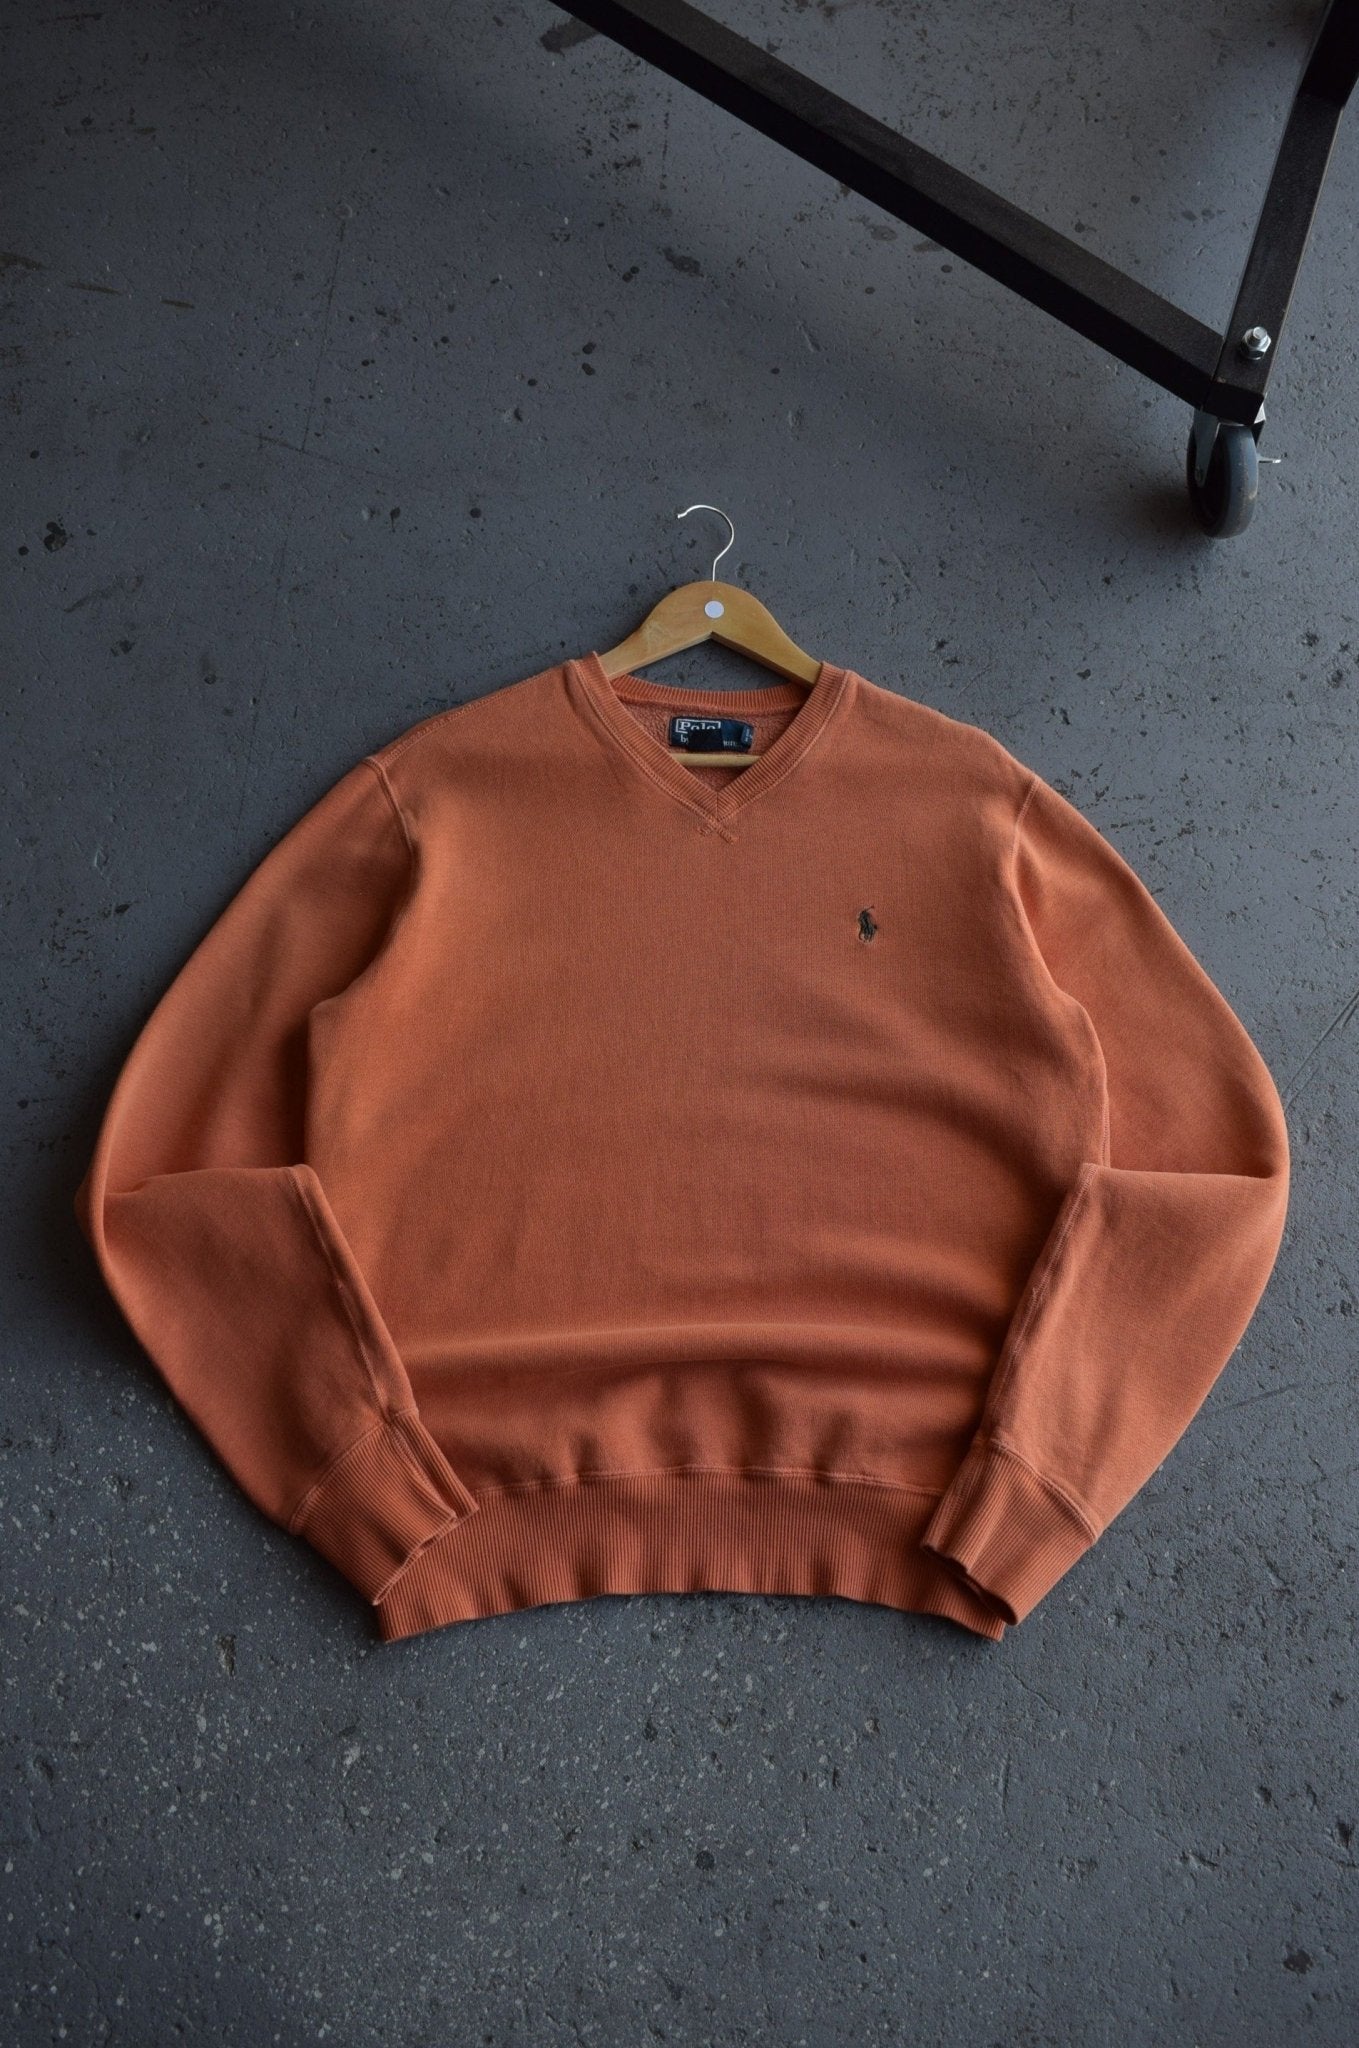 Vintage Polo Ralph Lauren Embroidered Sweater (M) - Retrospective Store